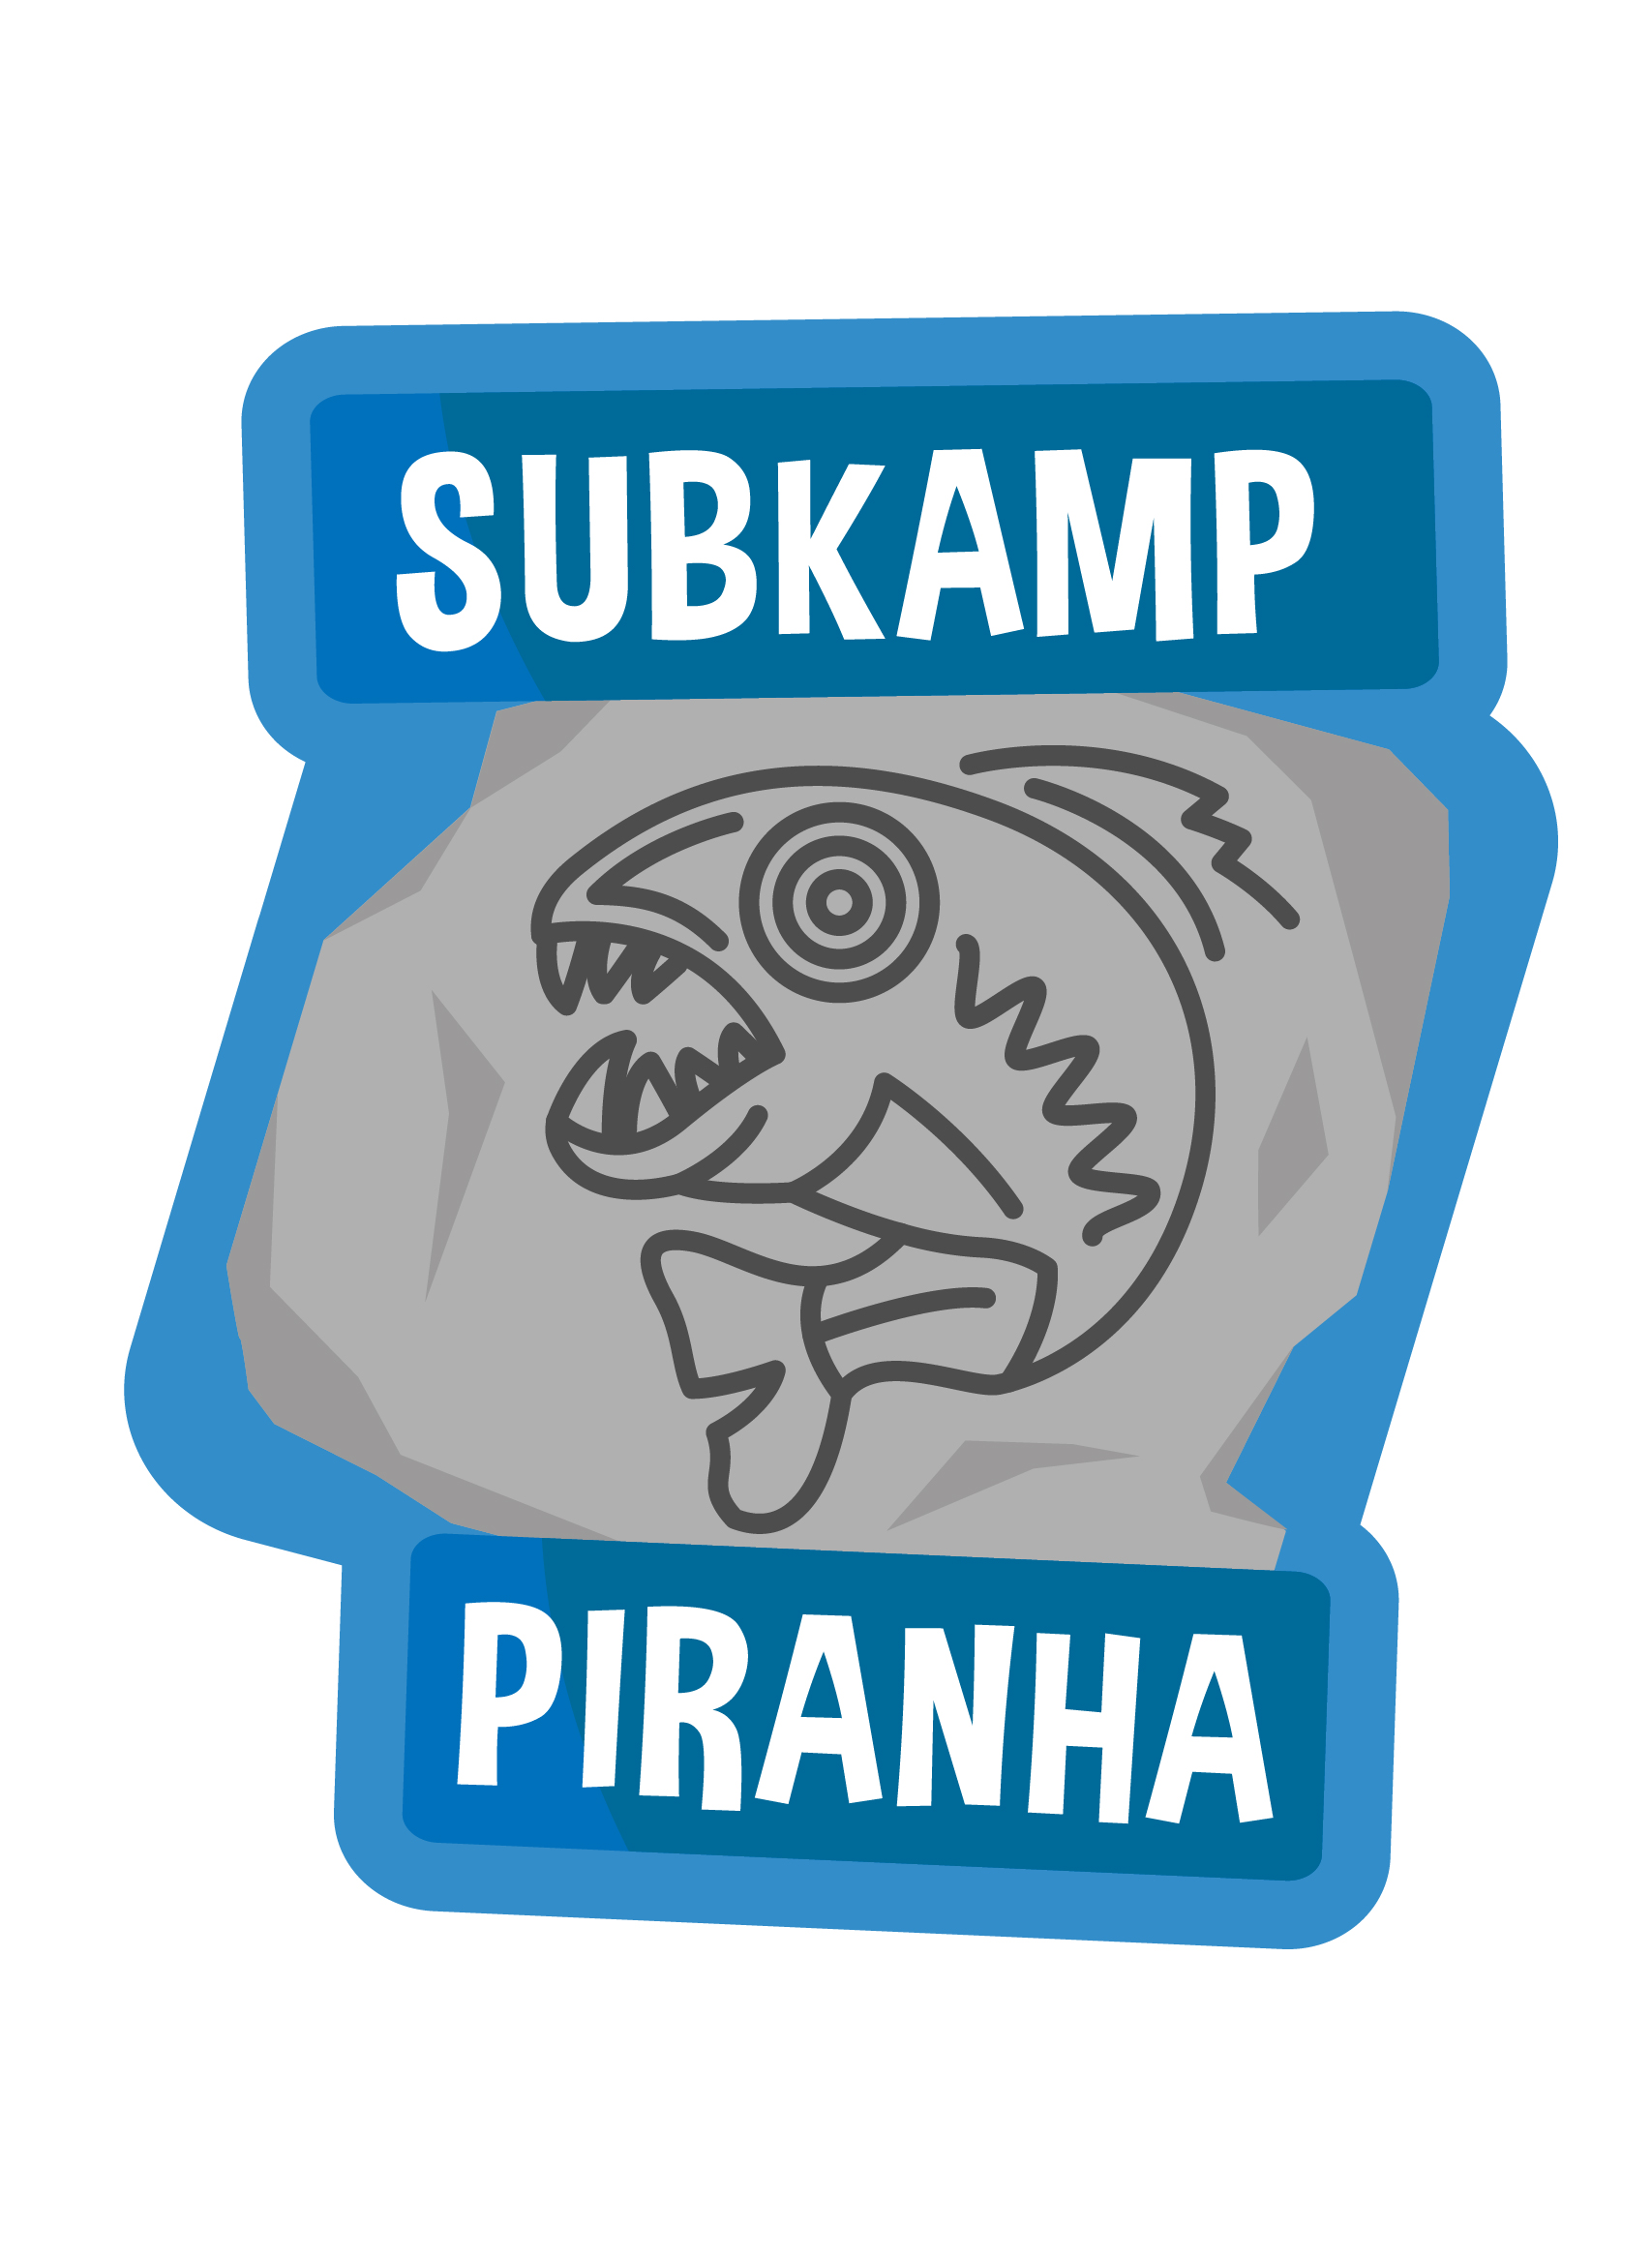 subkamp logos piranha color 1